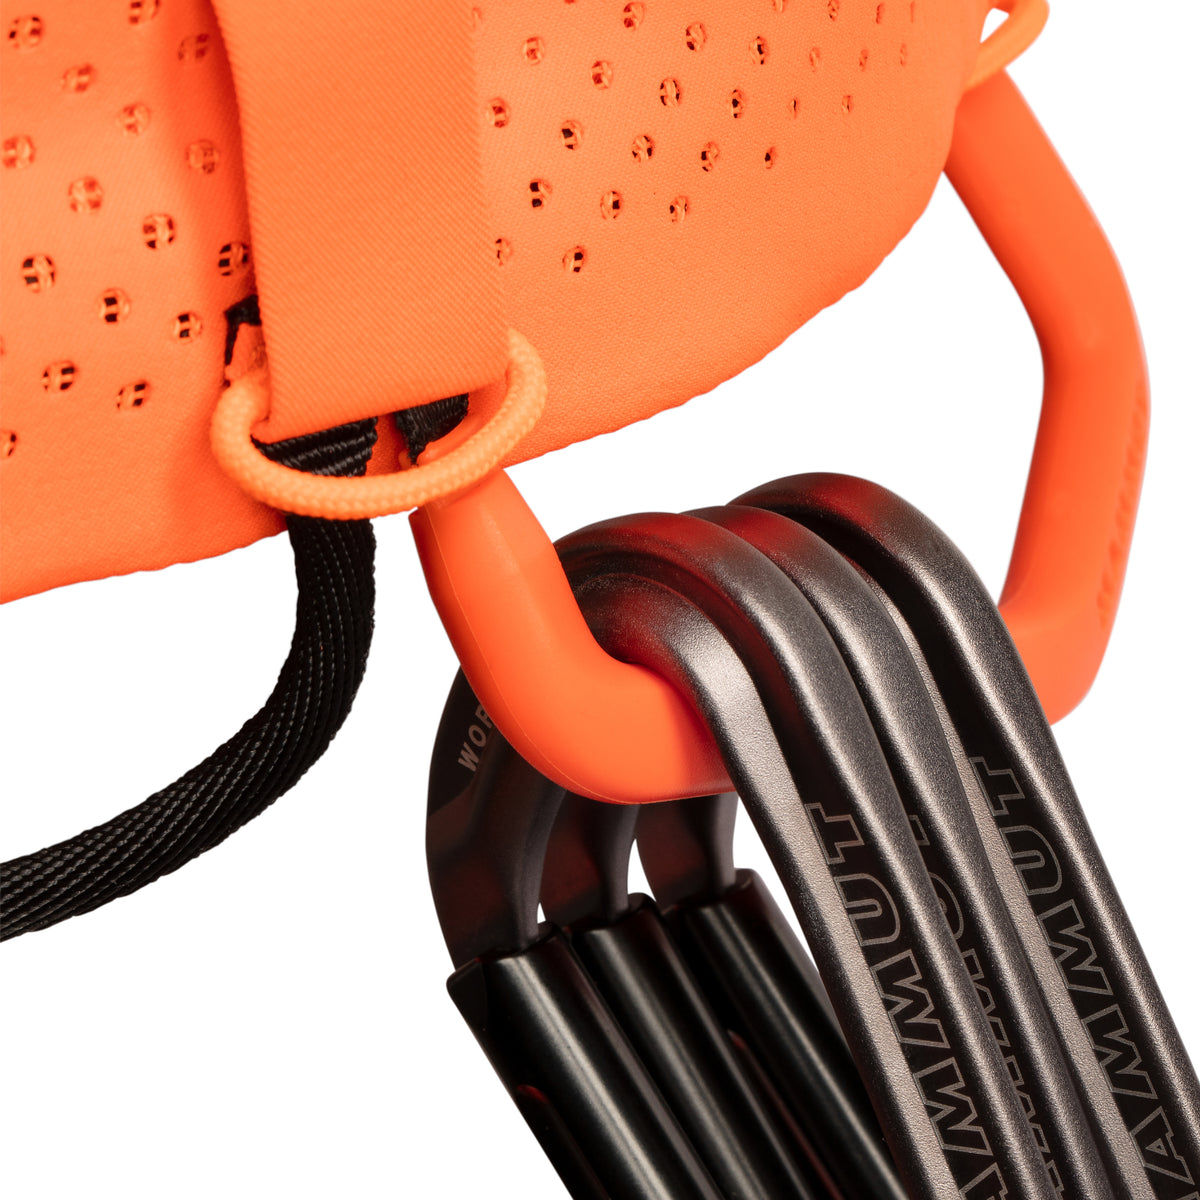 Mammut Sender Harness orange black, gear loops